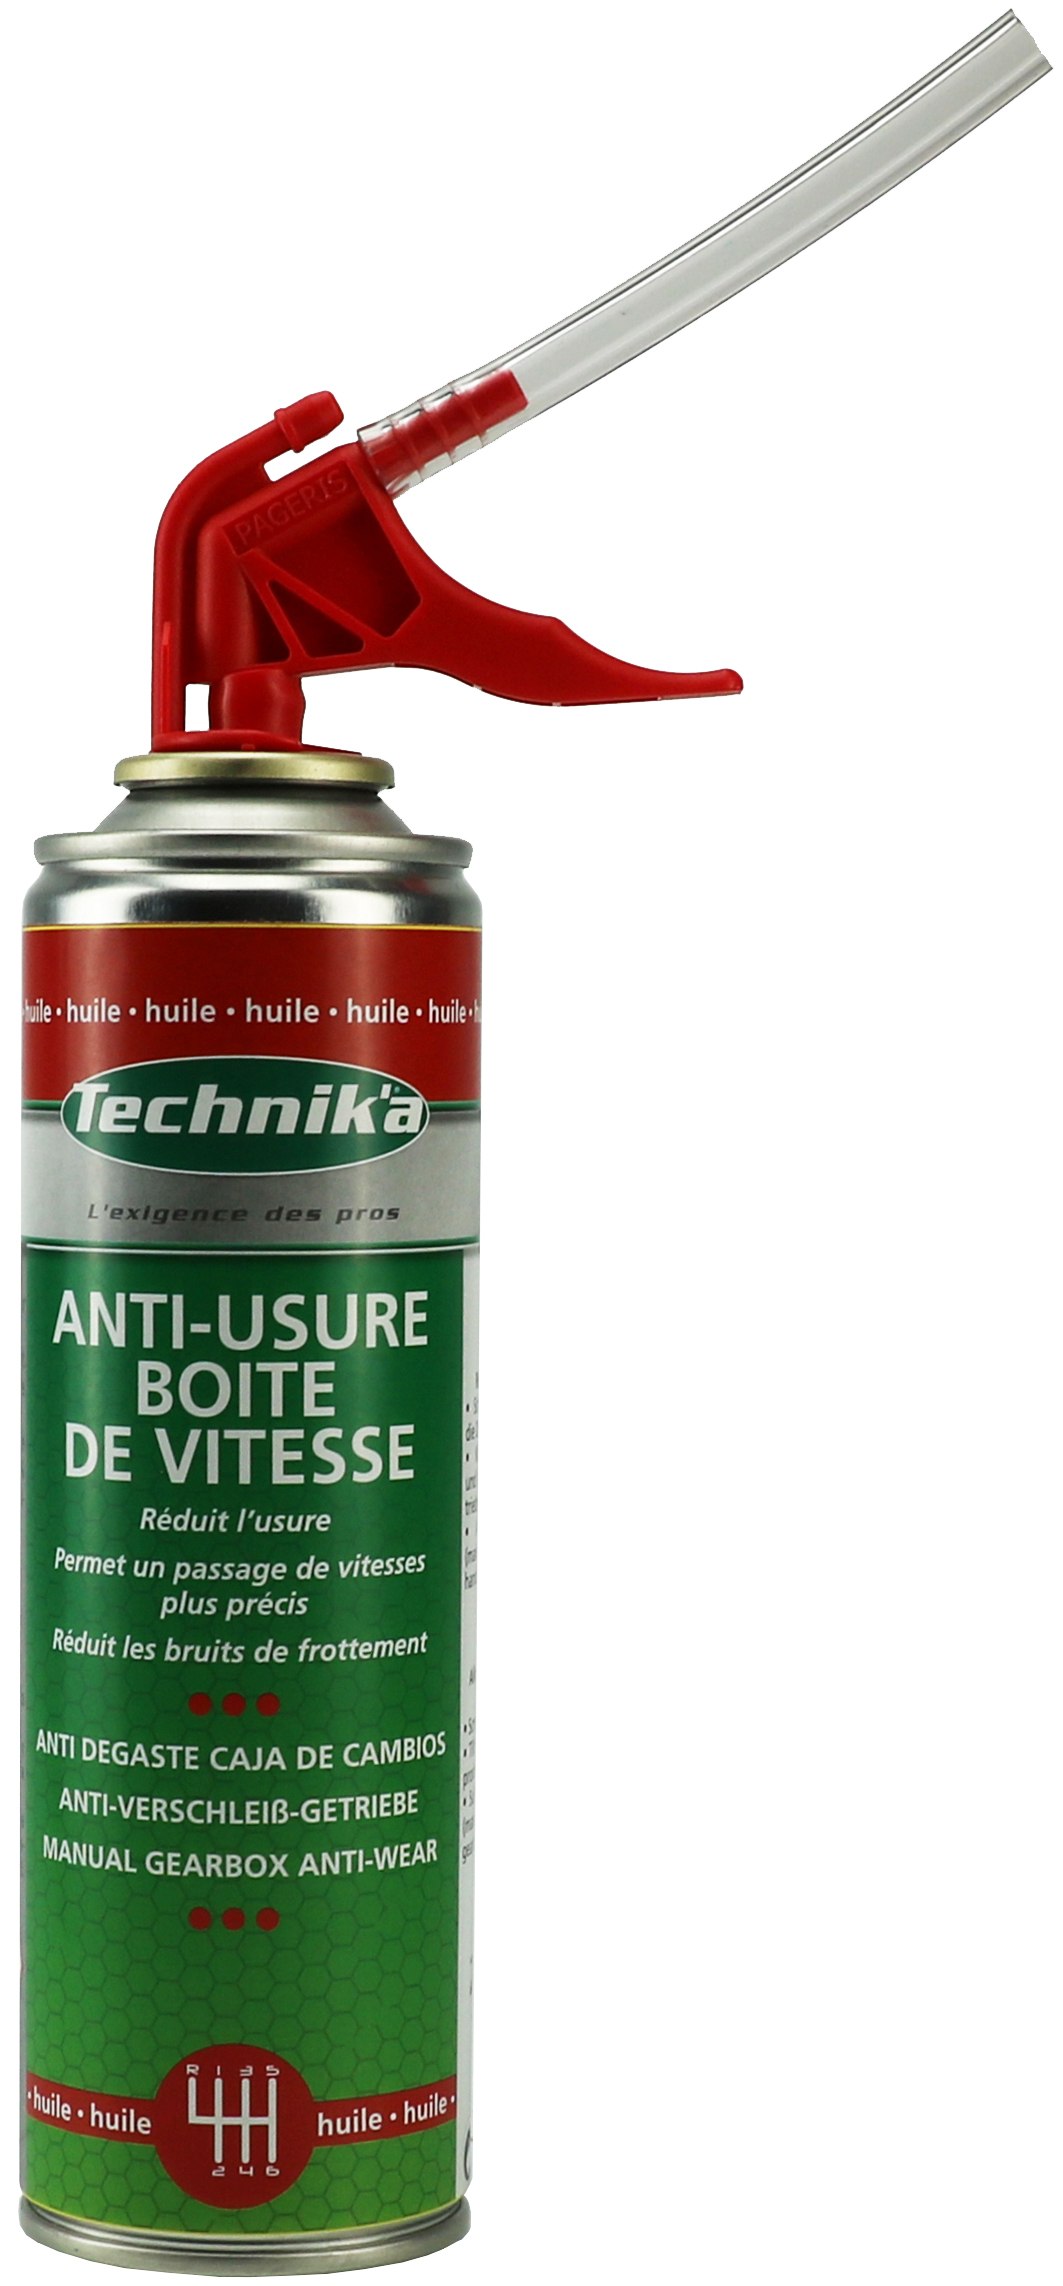 additifs huile - Anti-usure boite de vitesse Technik'a 860107